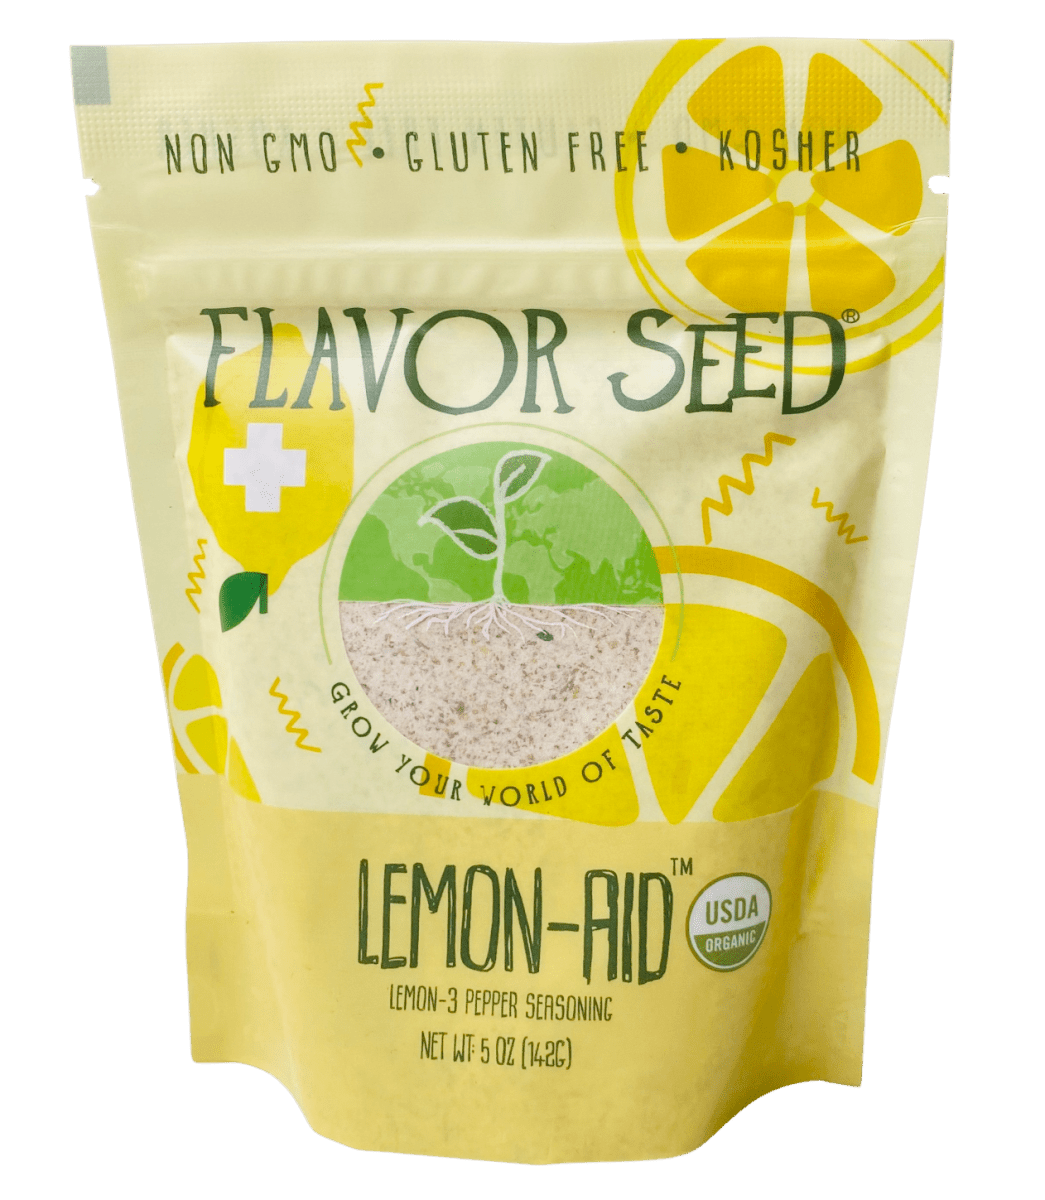 FLAVOR SEED - Lemon-Aid Organic Lemon 3-Pepper Seasoning - Flavor Seed